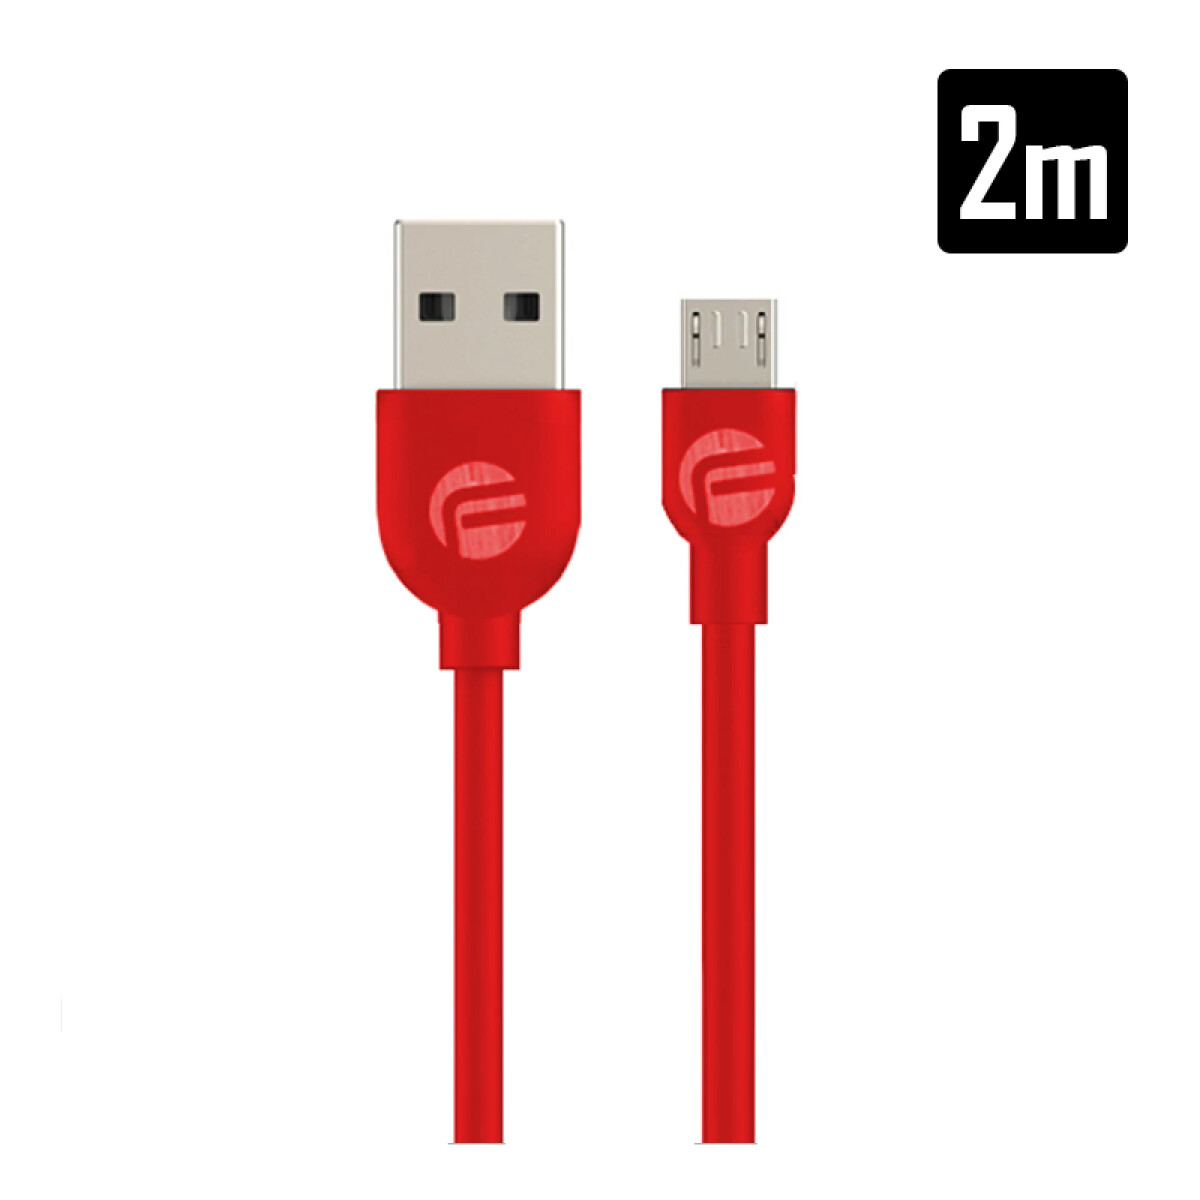 Cable Micro USB 7 FT chato FIFO60418 - Unica 